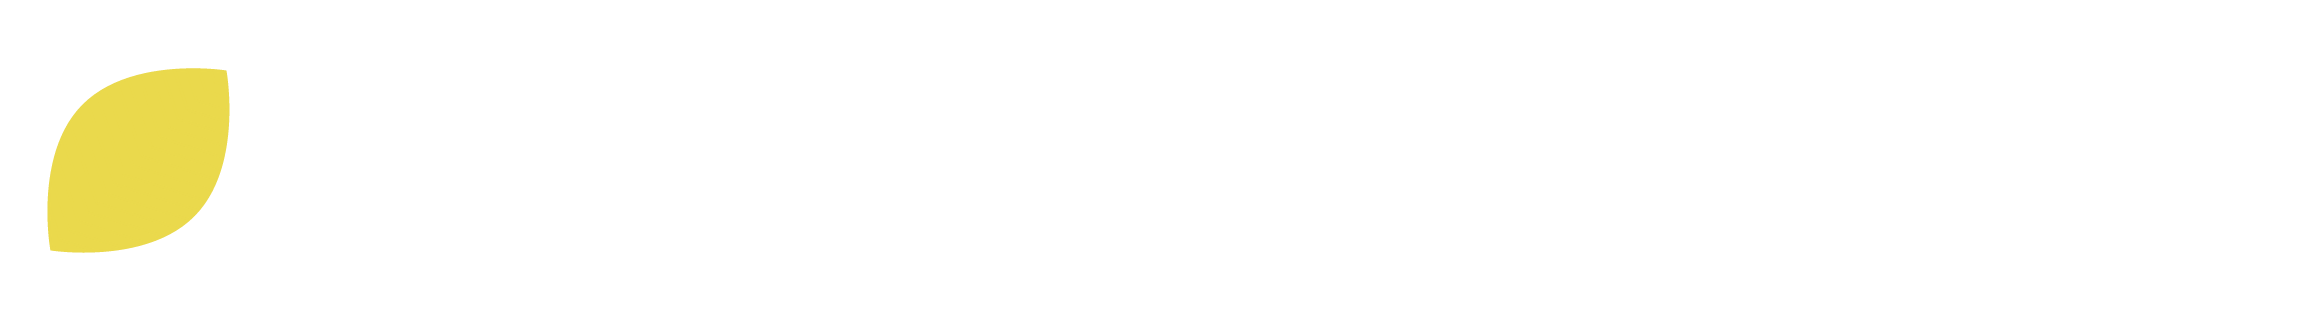 Vine Strategies Logo & Branding (19)